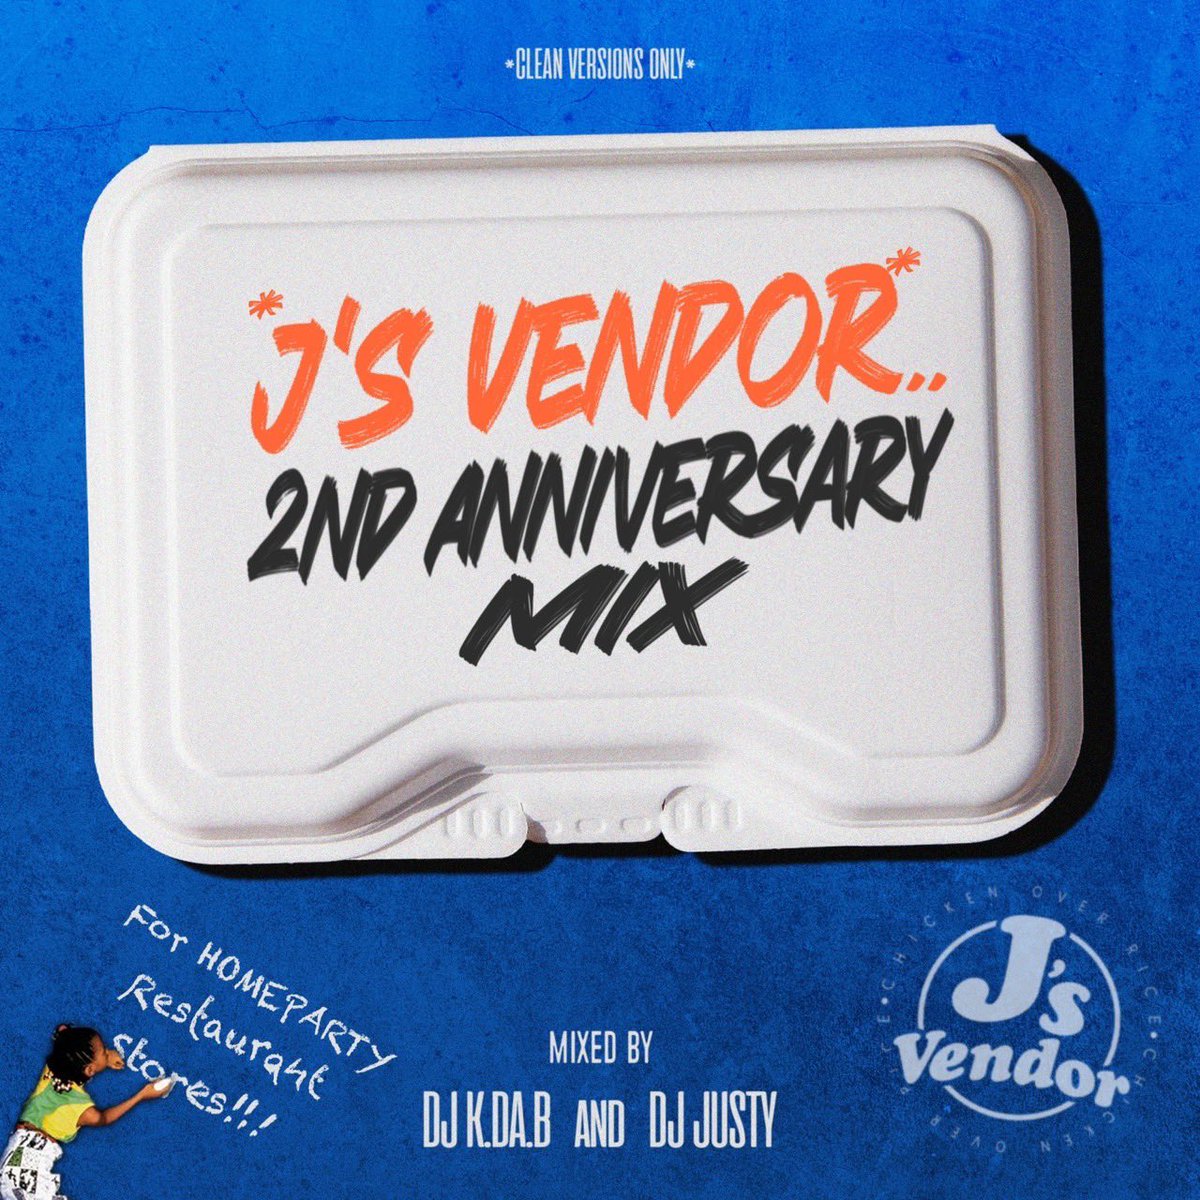 【MIXTAPE公開】 AVALON J's Vendor 2nd ANNIVERSARY MIX -CLEAN VERSIONS ONLY- MIXED BY DJ K.DA.B AND DJ JUSTY @DJKDAB @djjustyjp on.soundcloud.com/zLccnPtnpJDn4F… #mixtape #djmix #jsvendor